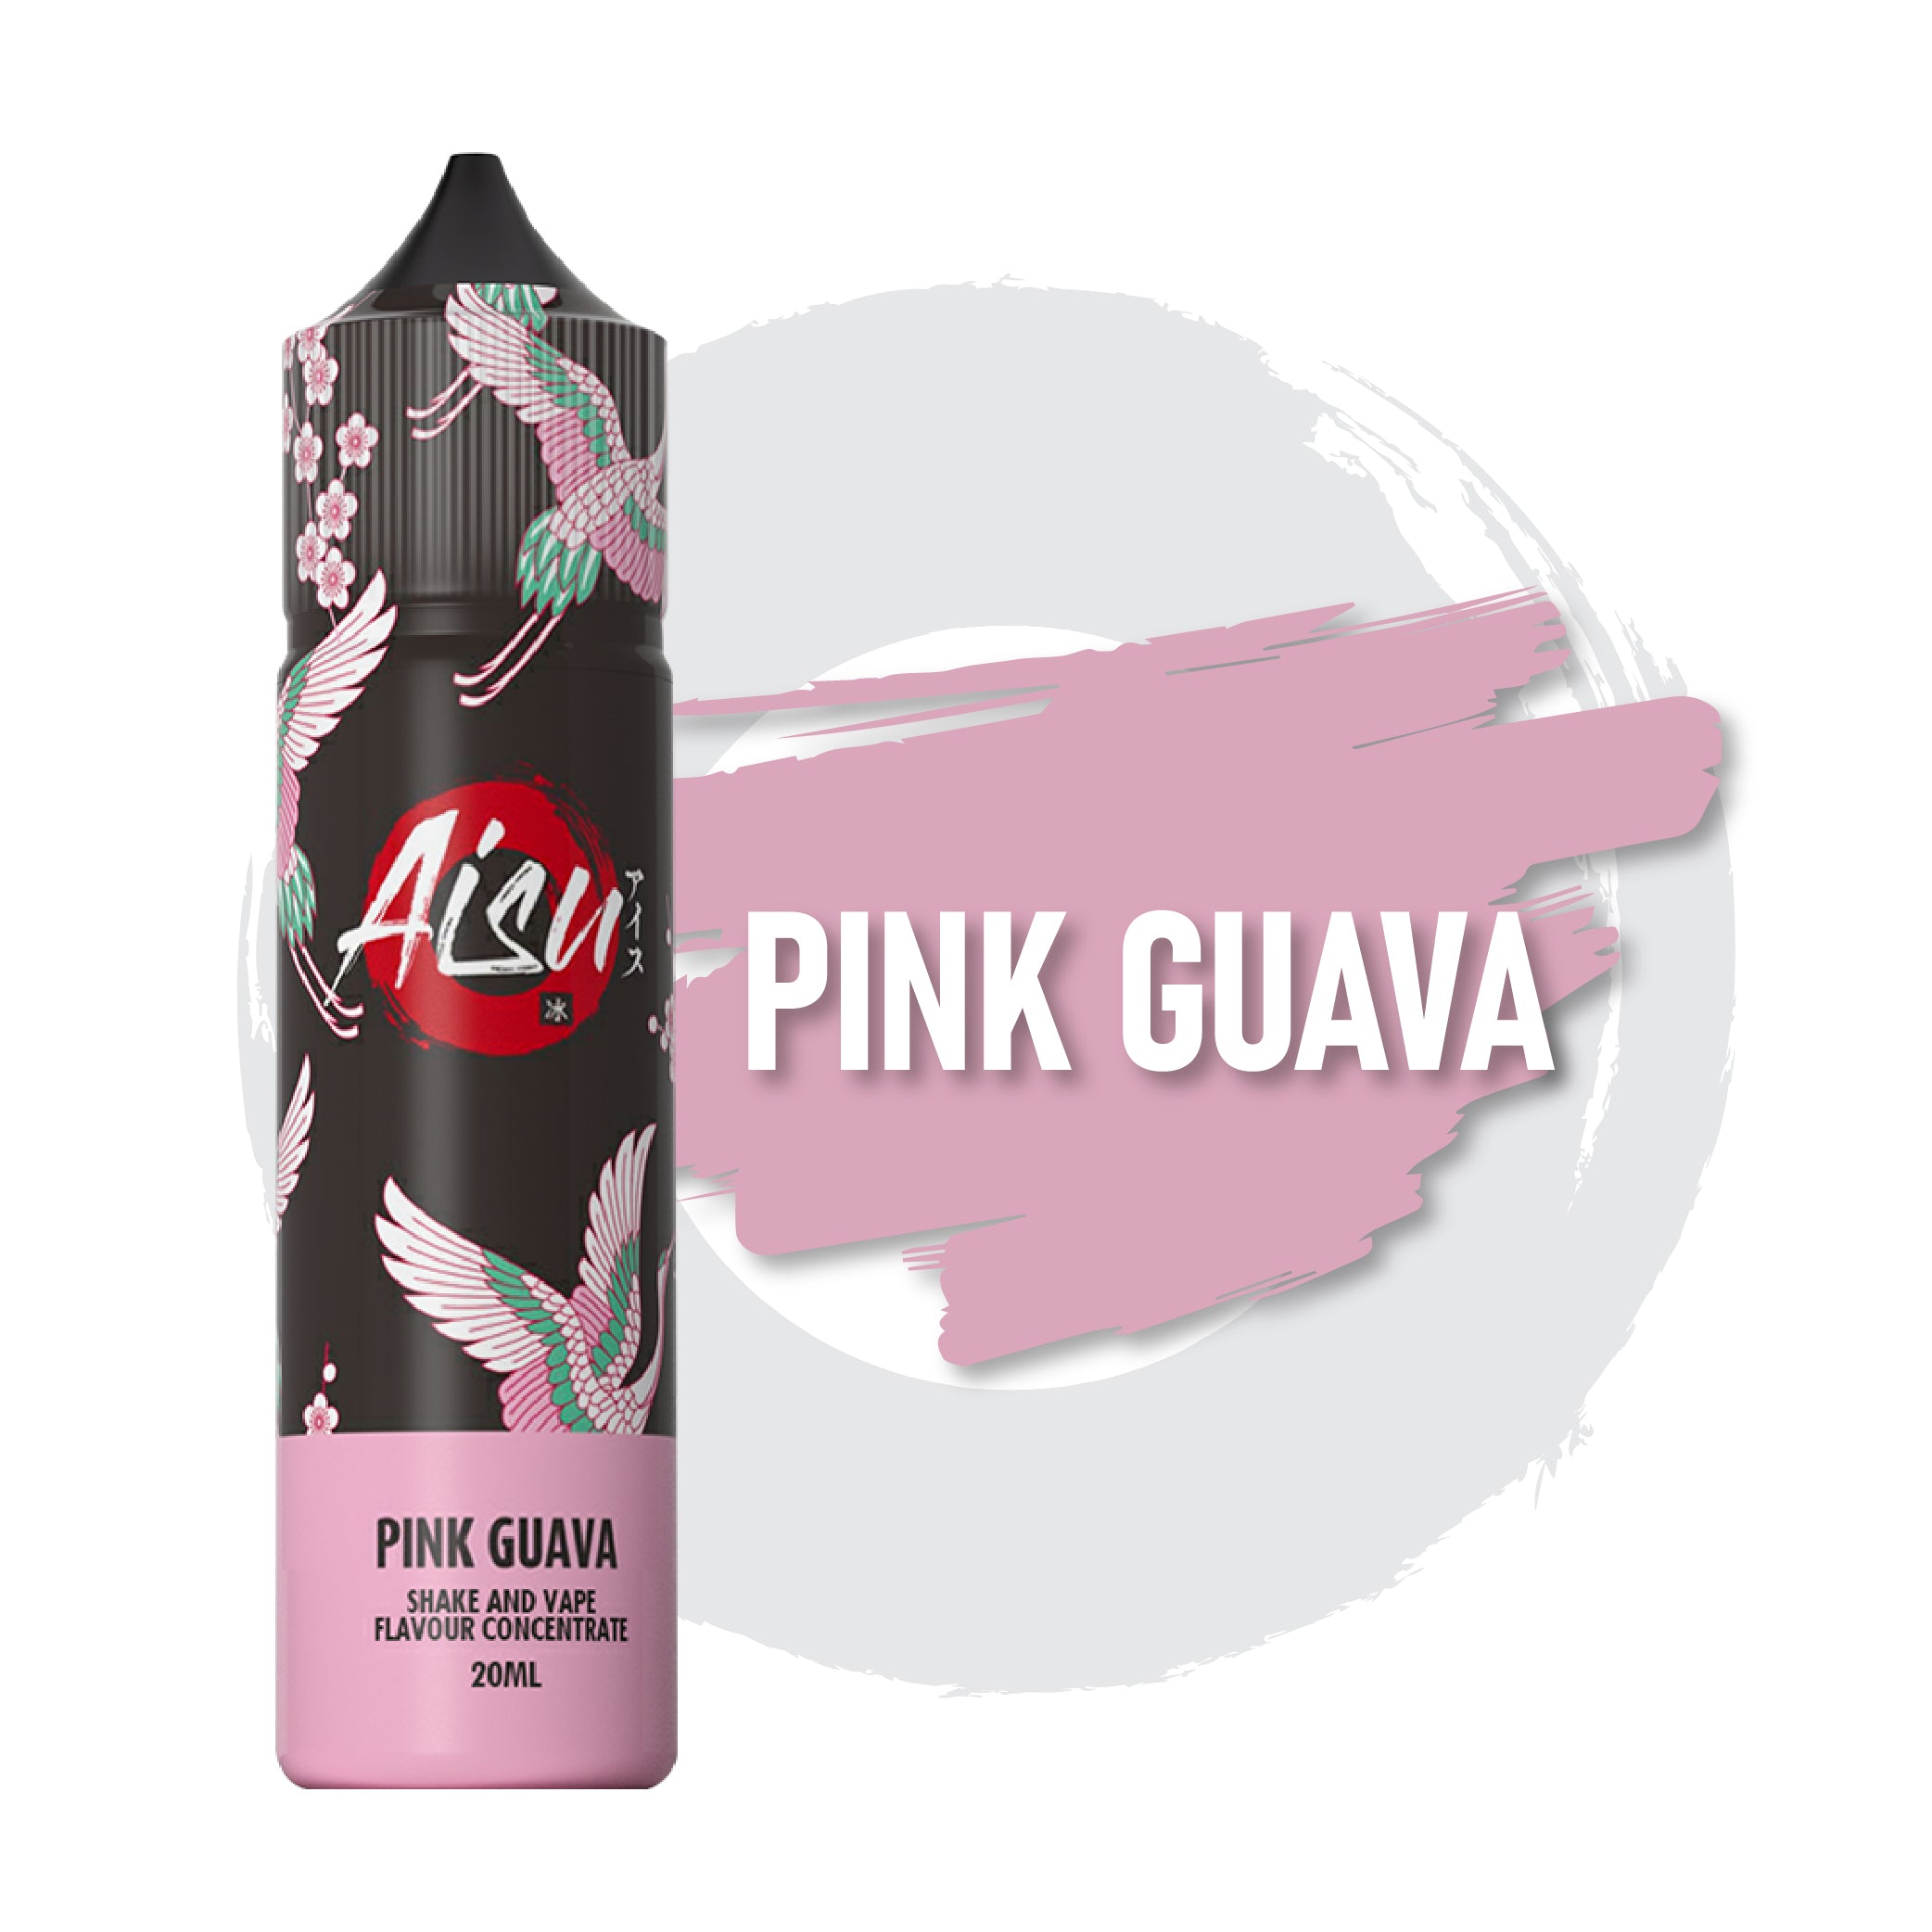 AISU Pink Guava Shake and Vape 20ml Flavour Concentrate e-liquid bottle